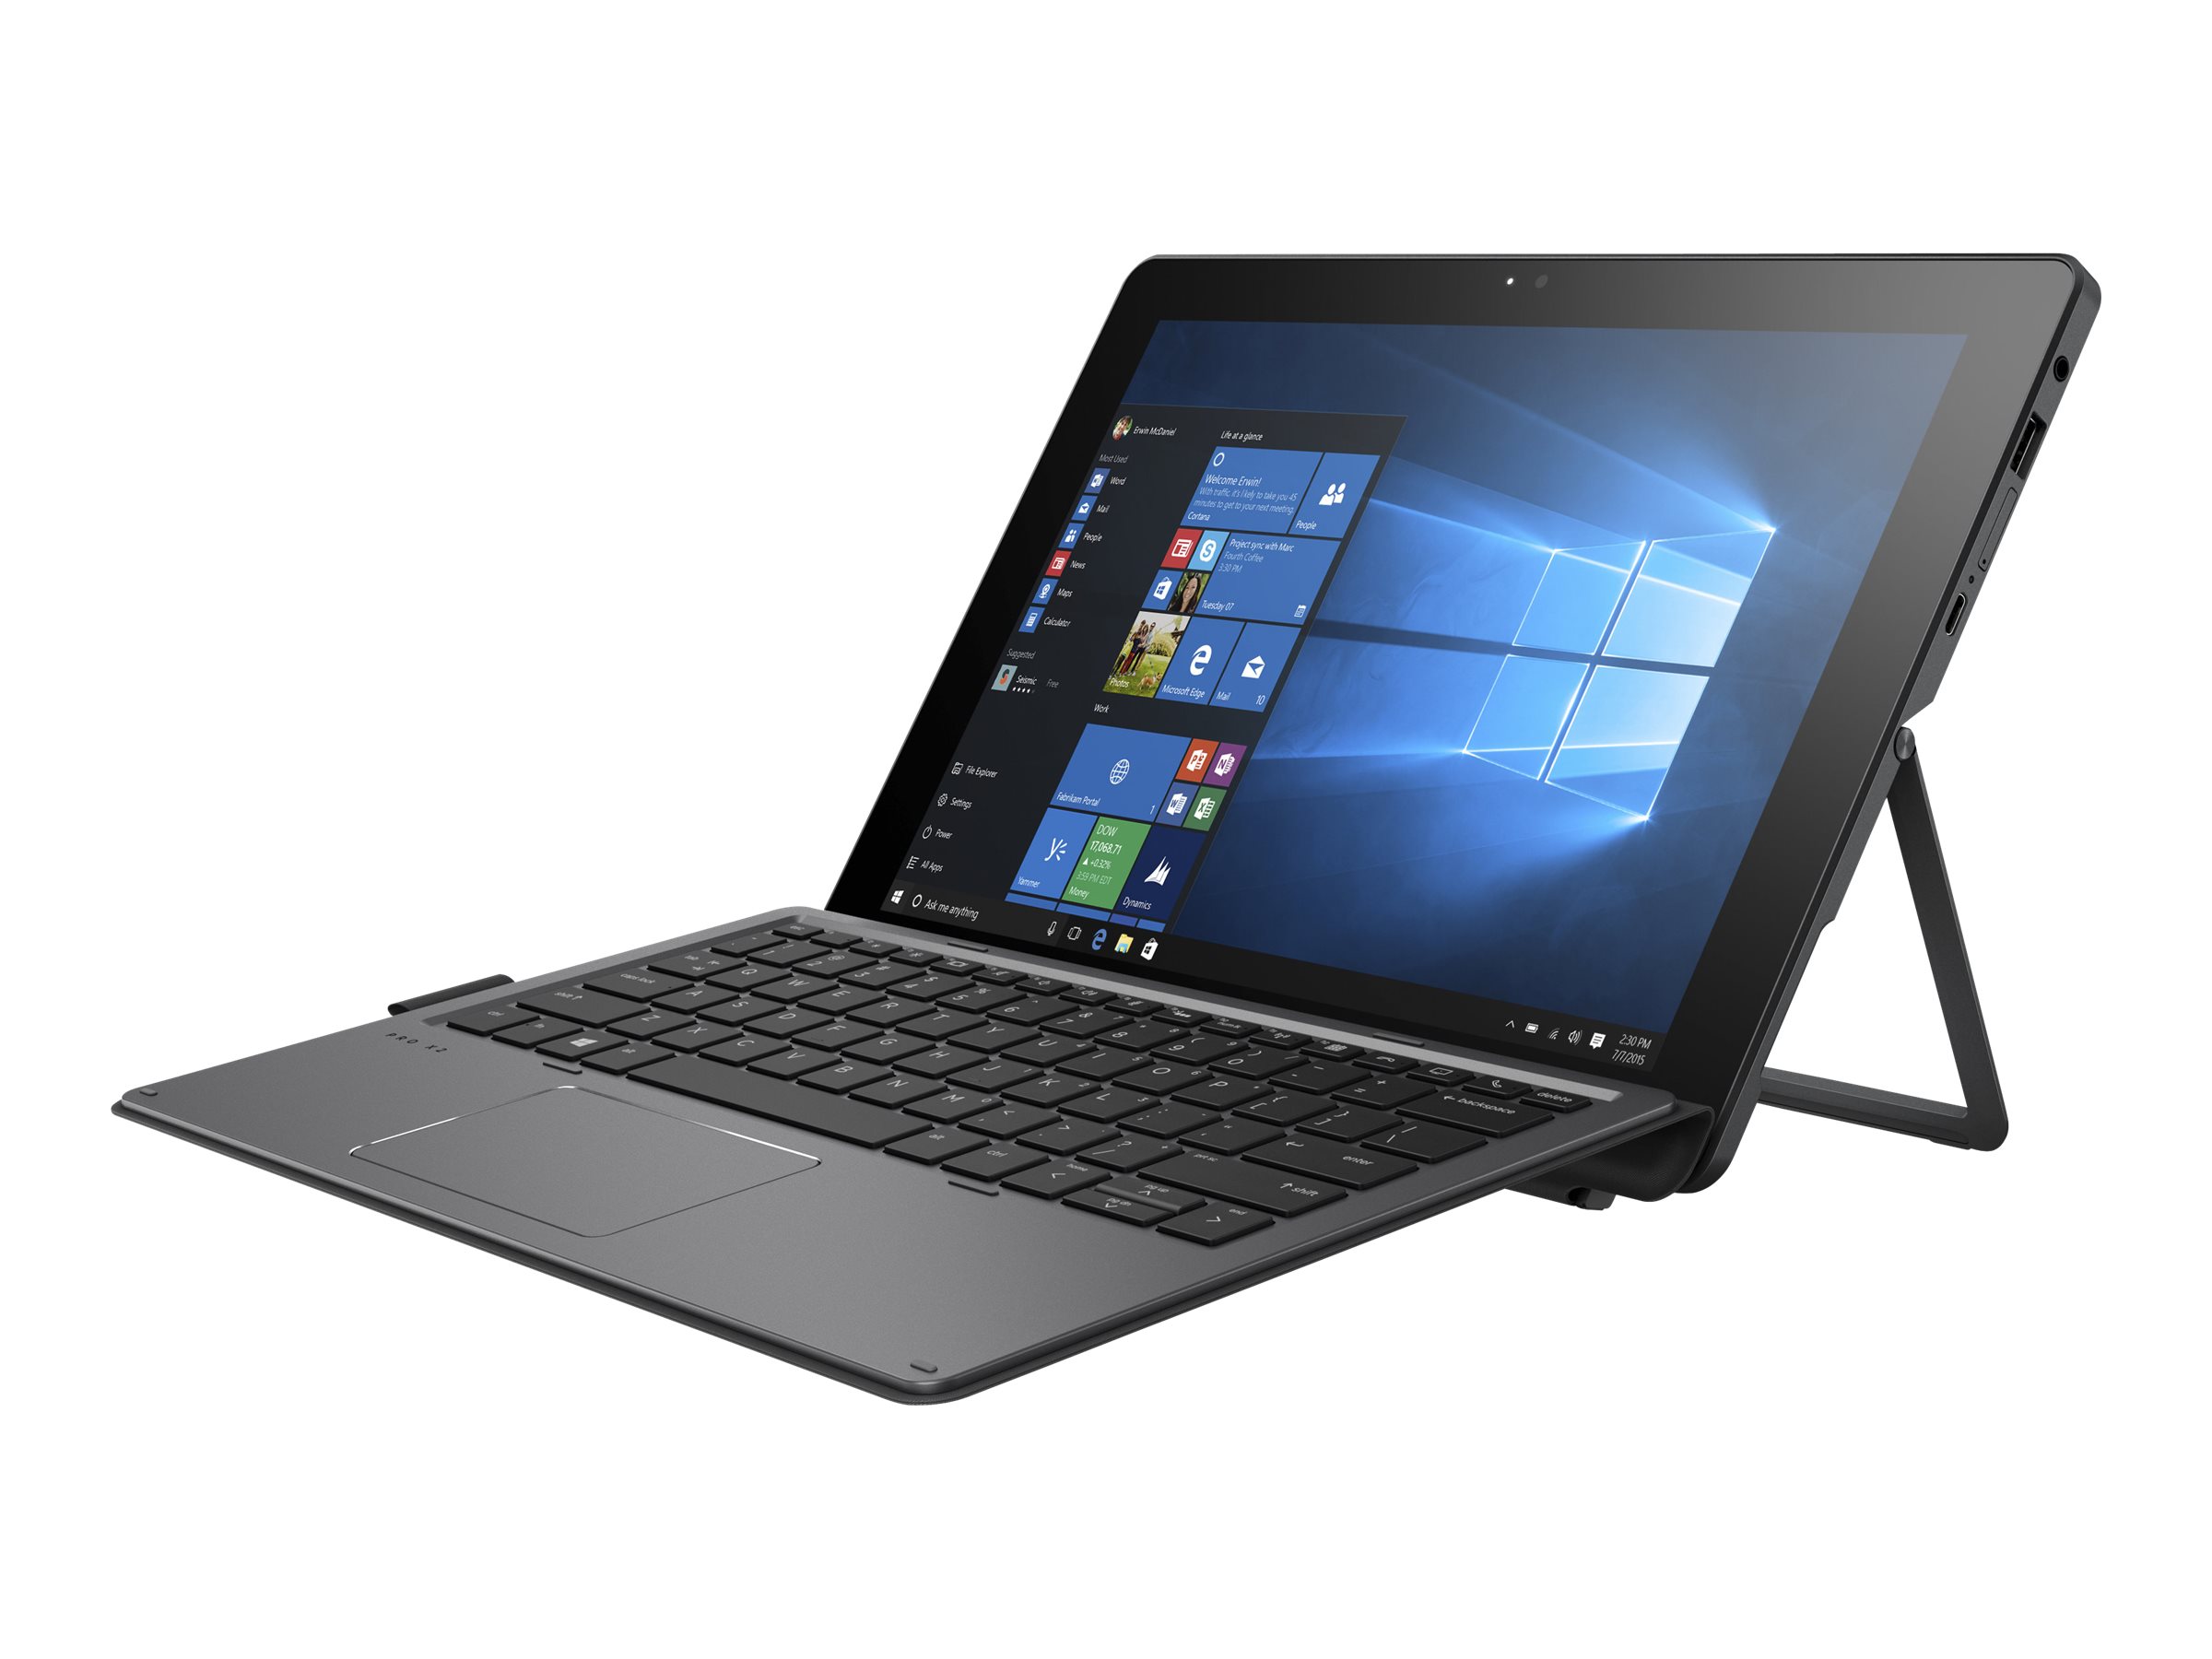 HP Pro x2 612 G2 - Tablet | www.shidirect.ca